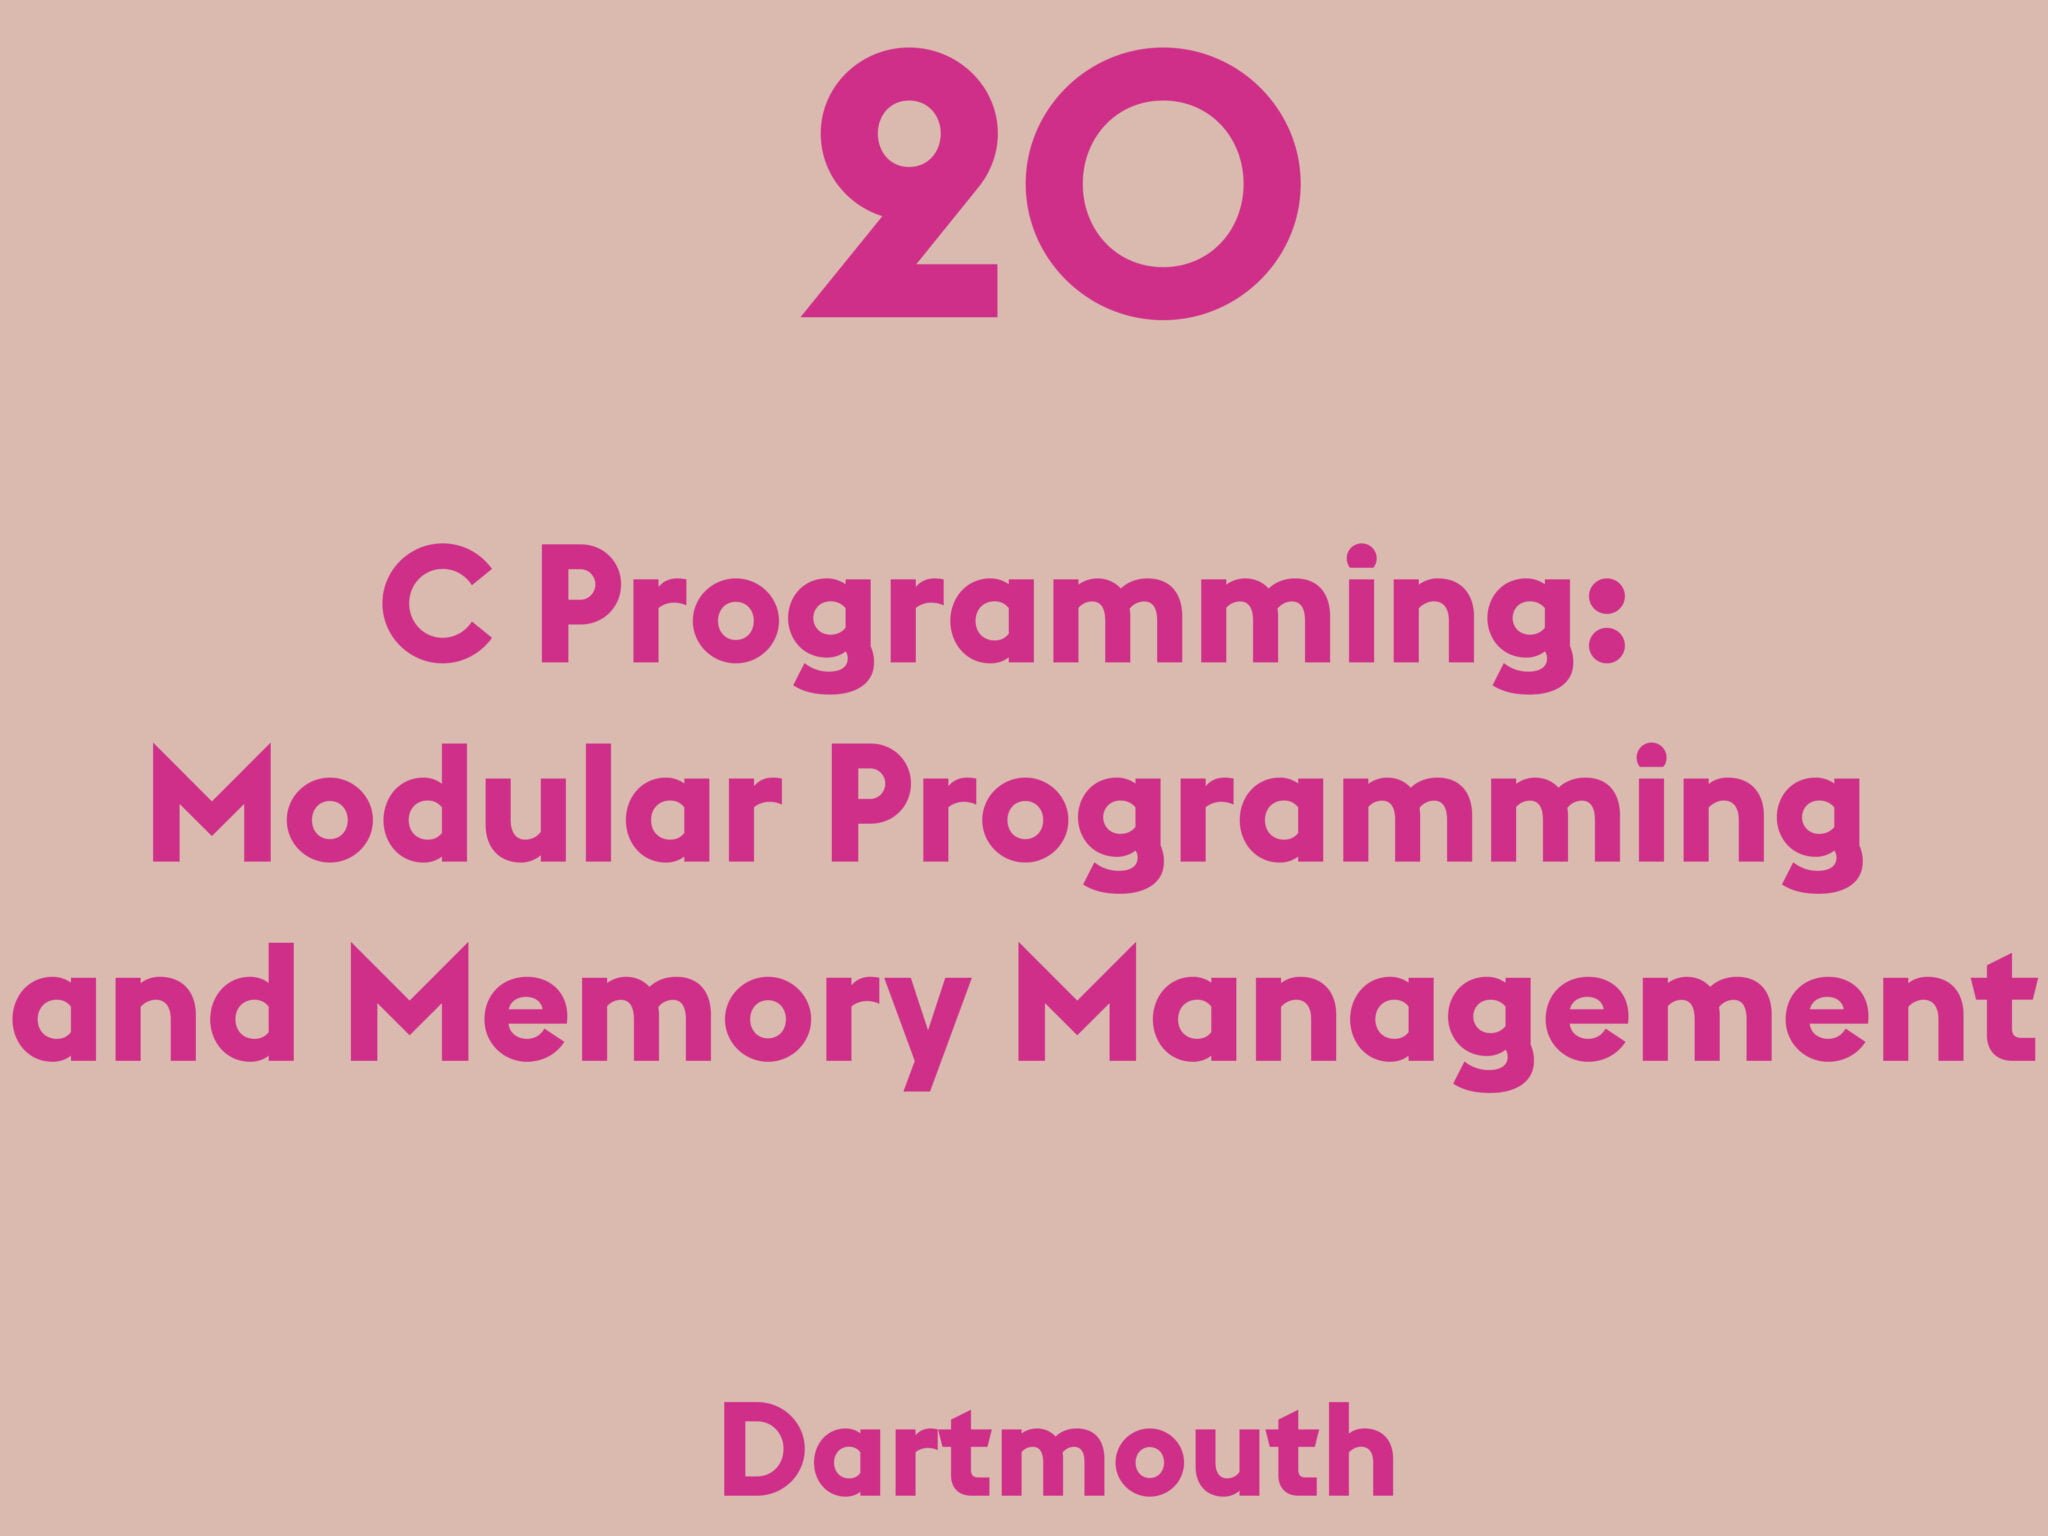 C Programming: Modular Programming and Memory Management